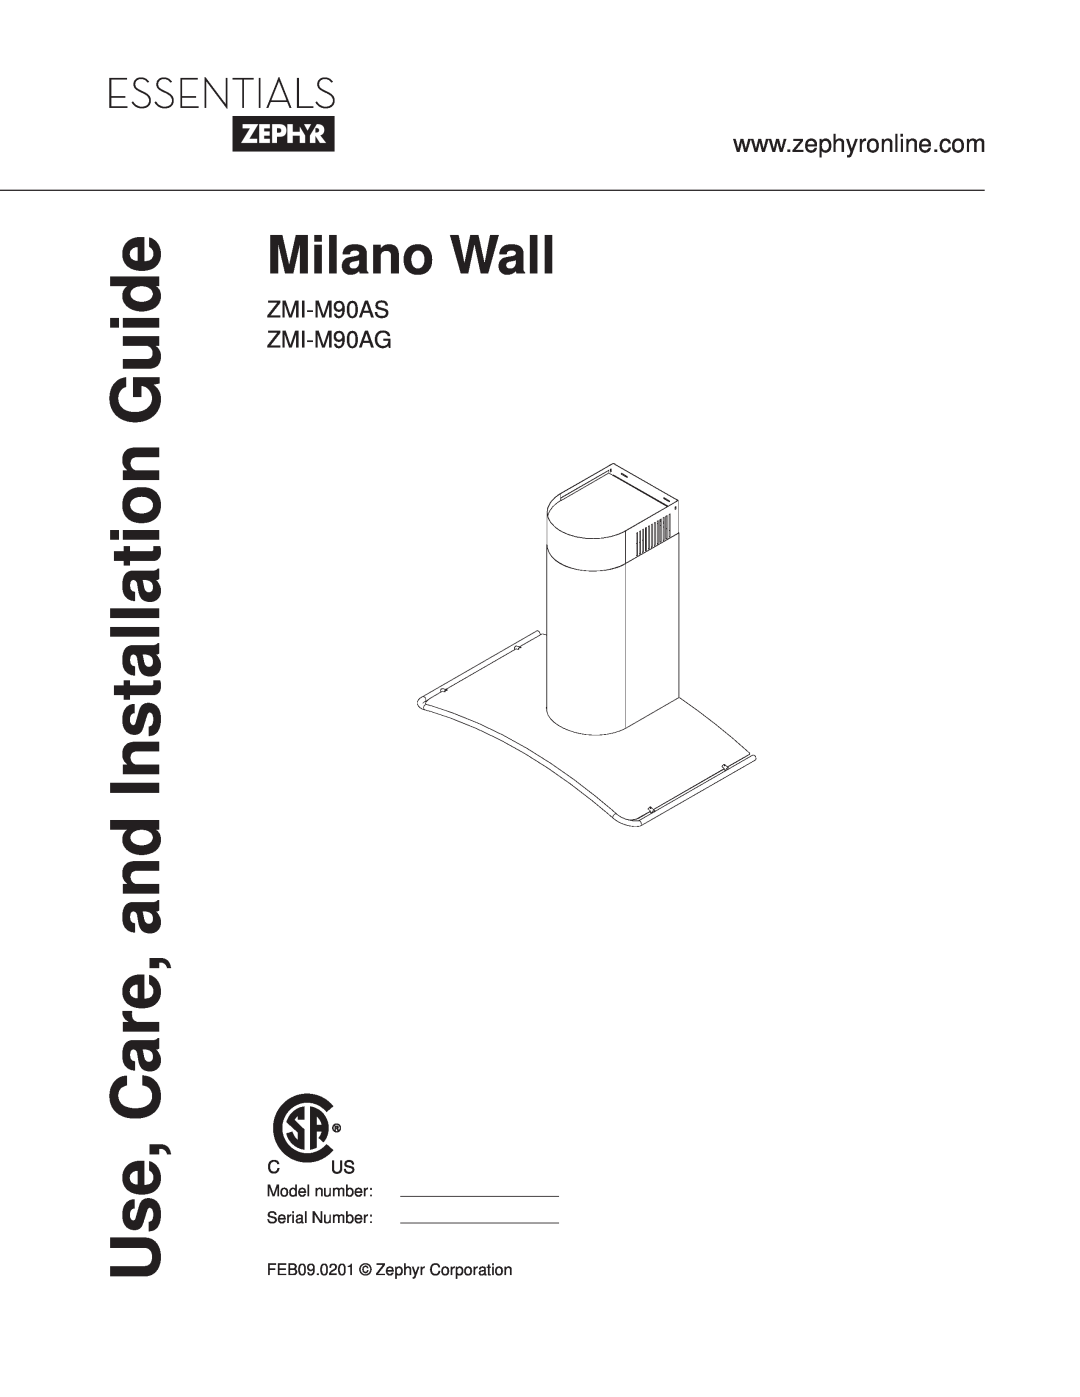 Zephyr ZMIM90AG manual Use, Care, and Installation Guide, Milano Wall, ZMI-M90AS ZMI-M90AG 